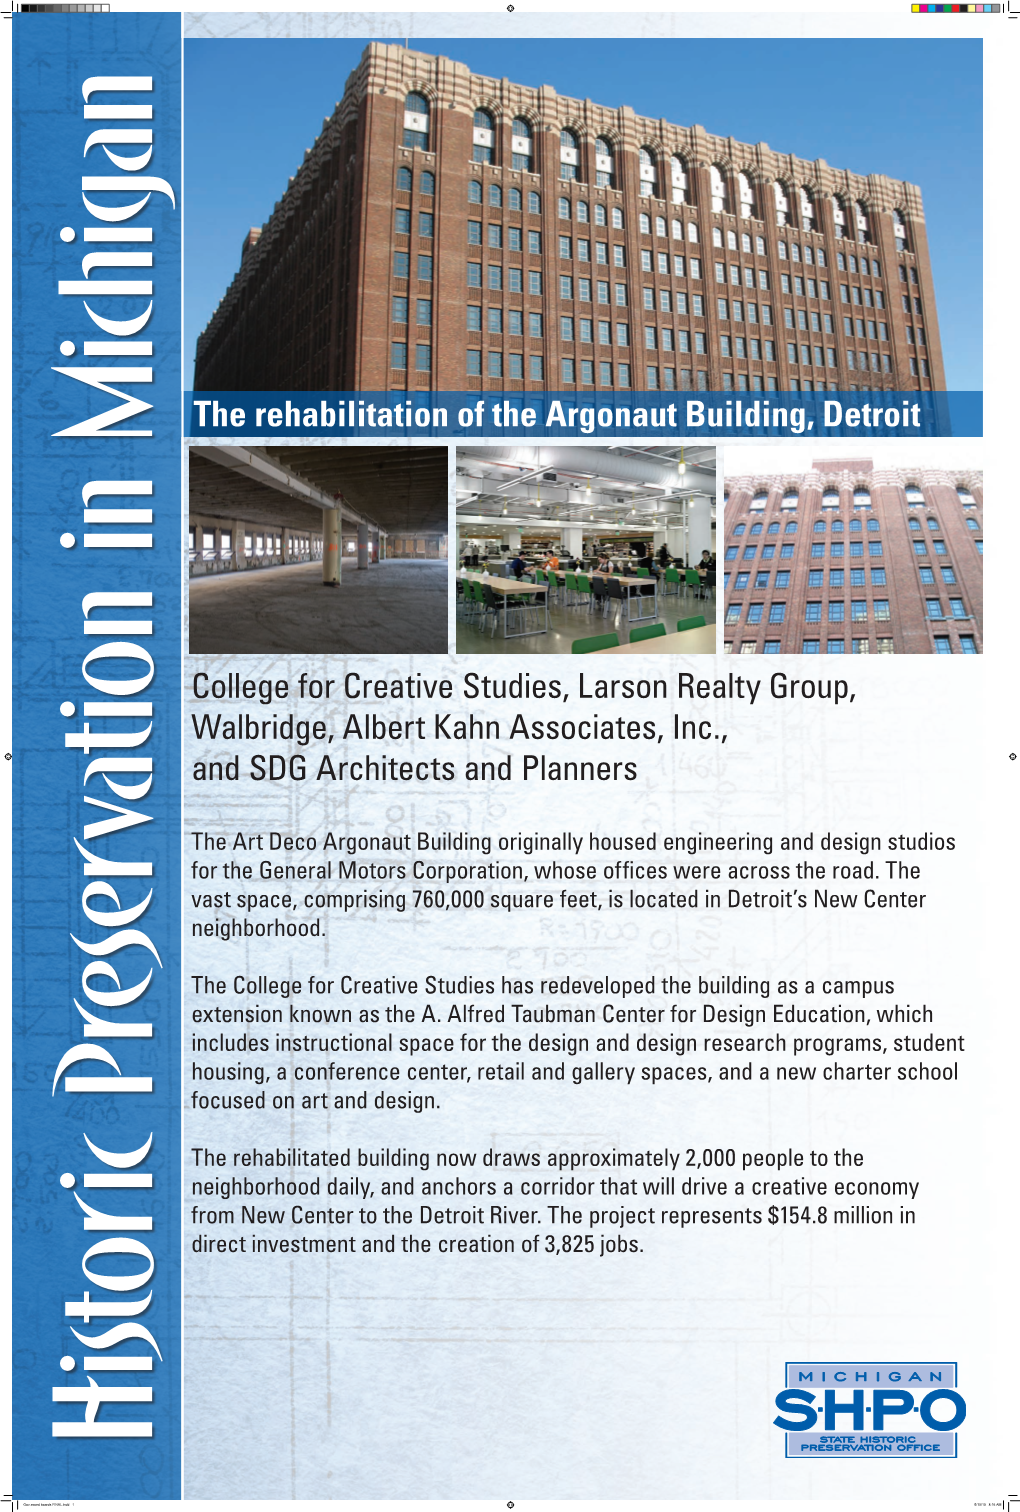 The Rehabilitation of the Argonaut Building, Detroit